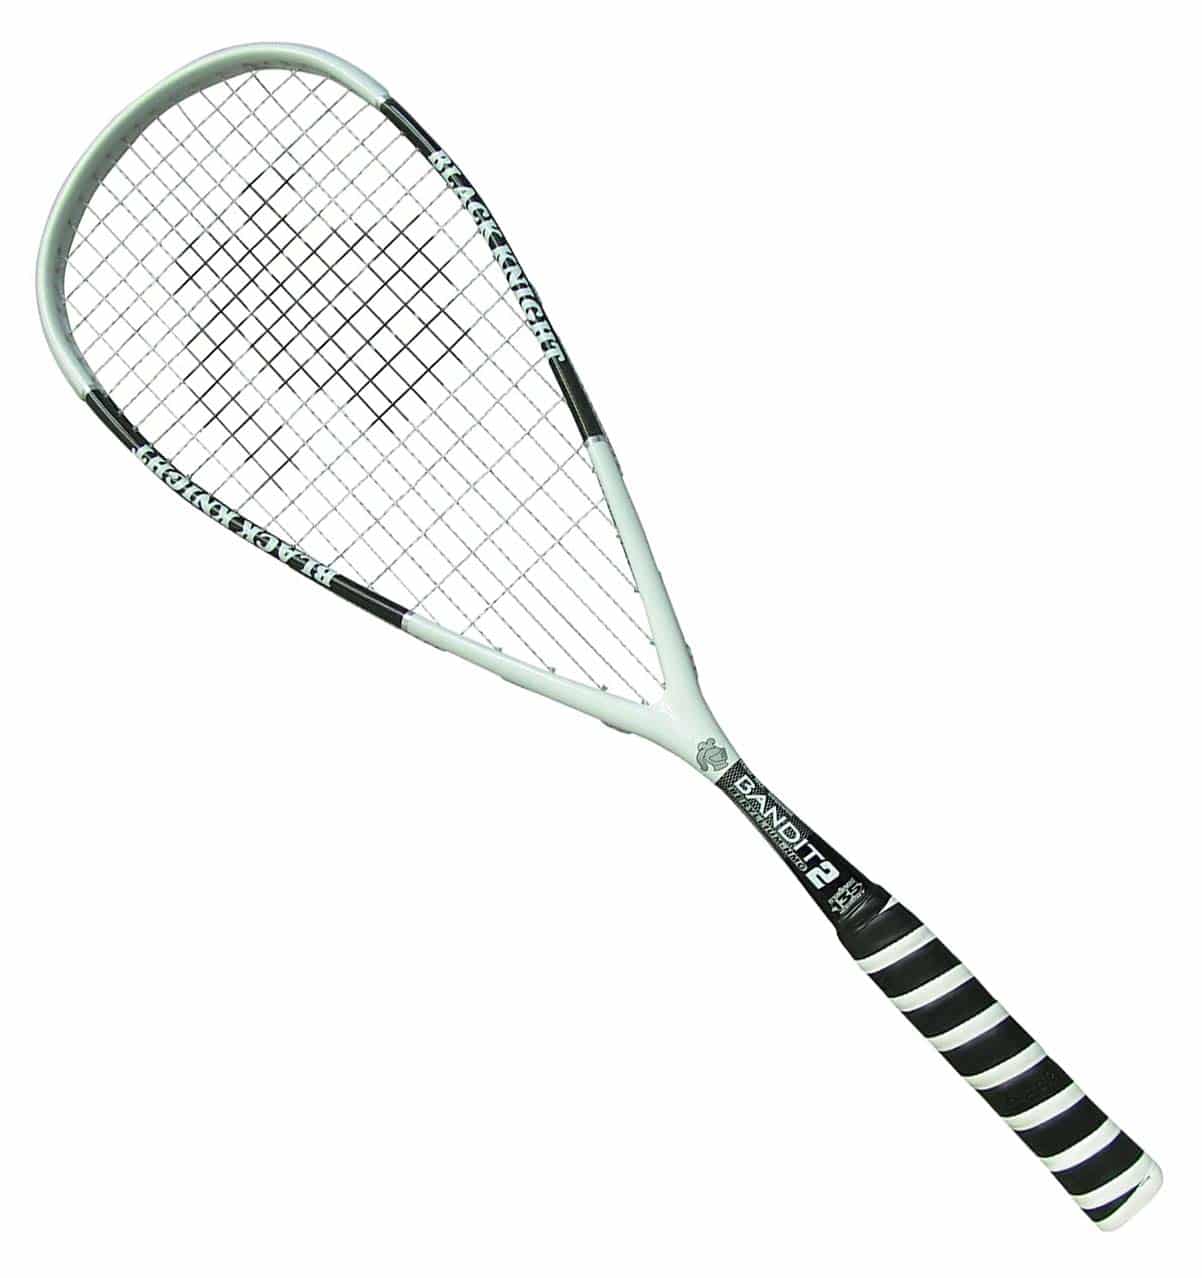 Best Inexpensive Squash Racket